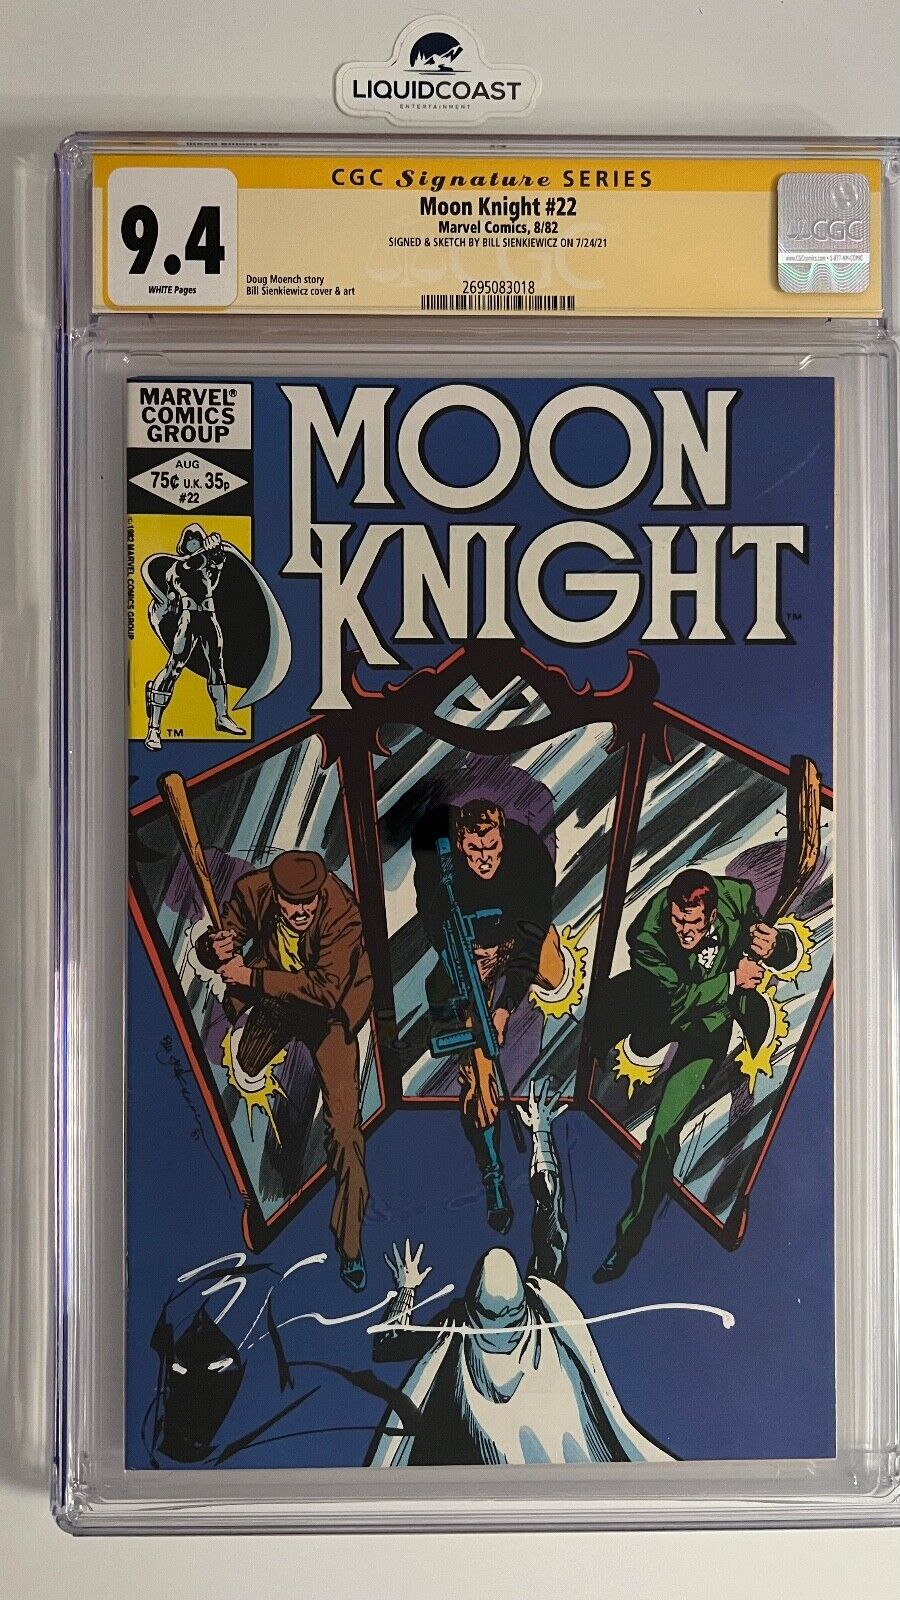 Moon Knight #22 SS CGC 9.4 SIGNED & SKETCH BY BILL SIENKIEWICZ